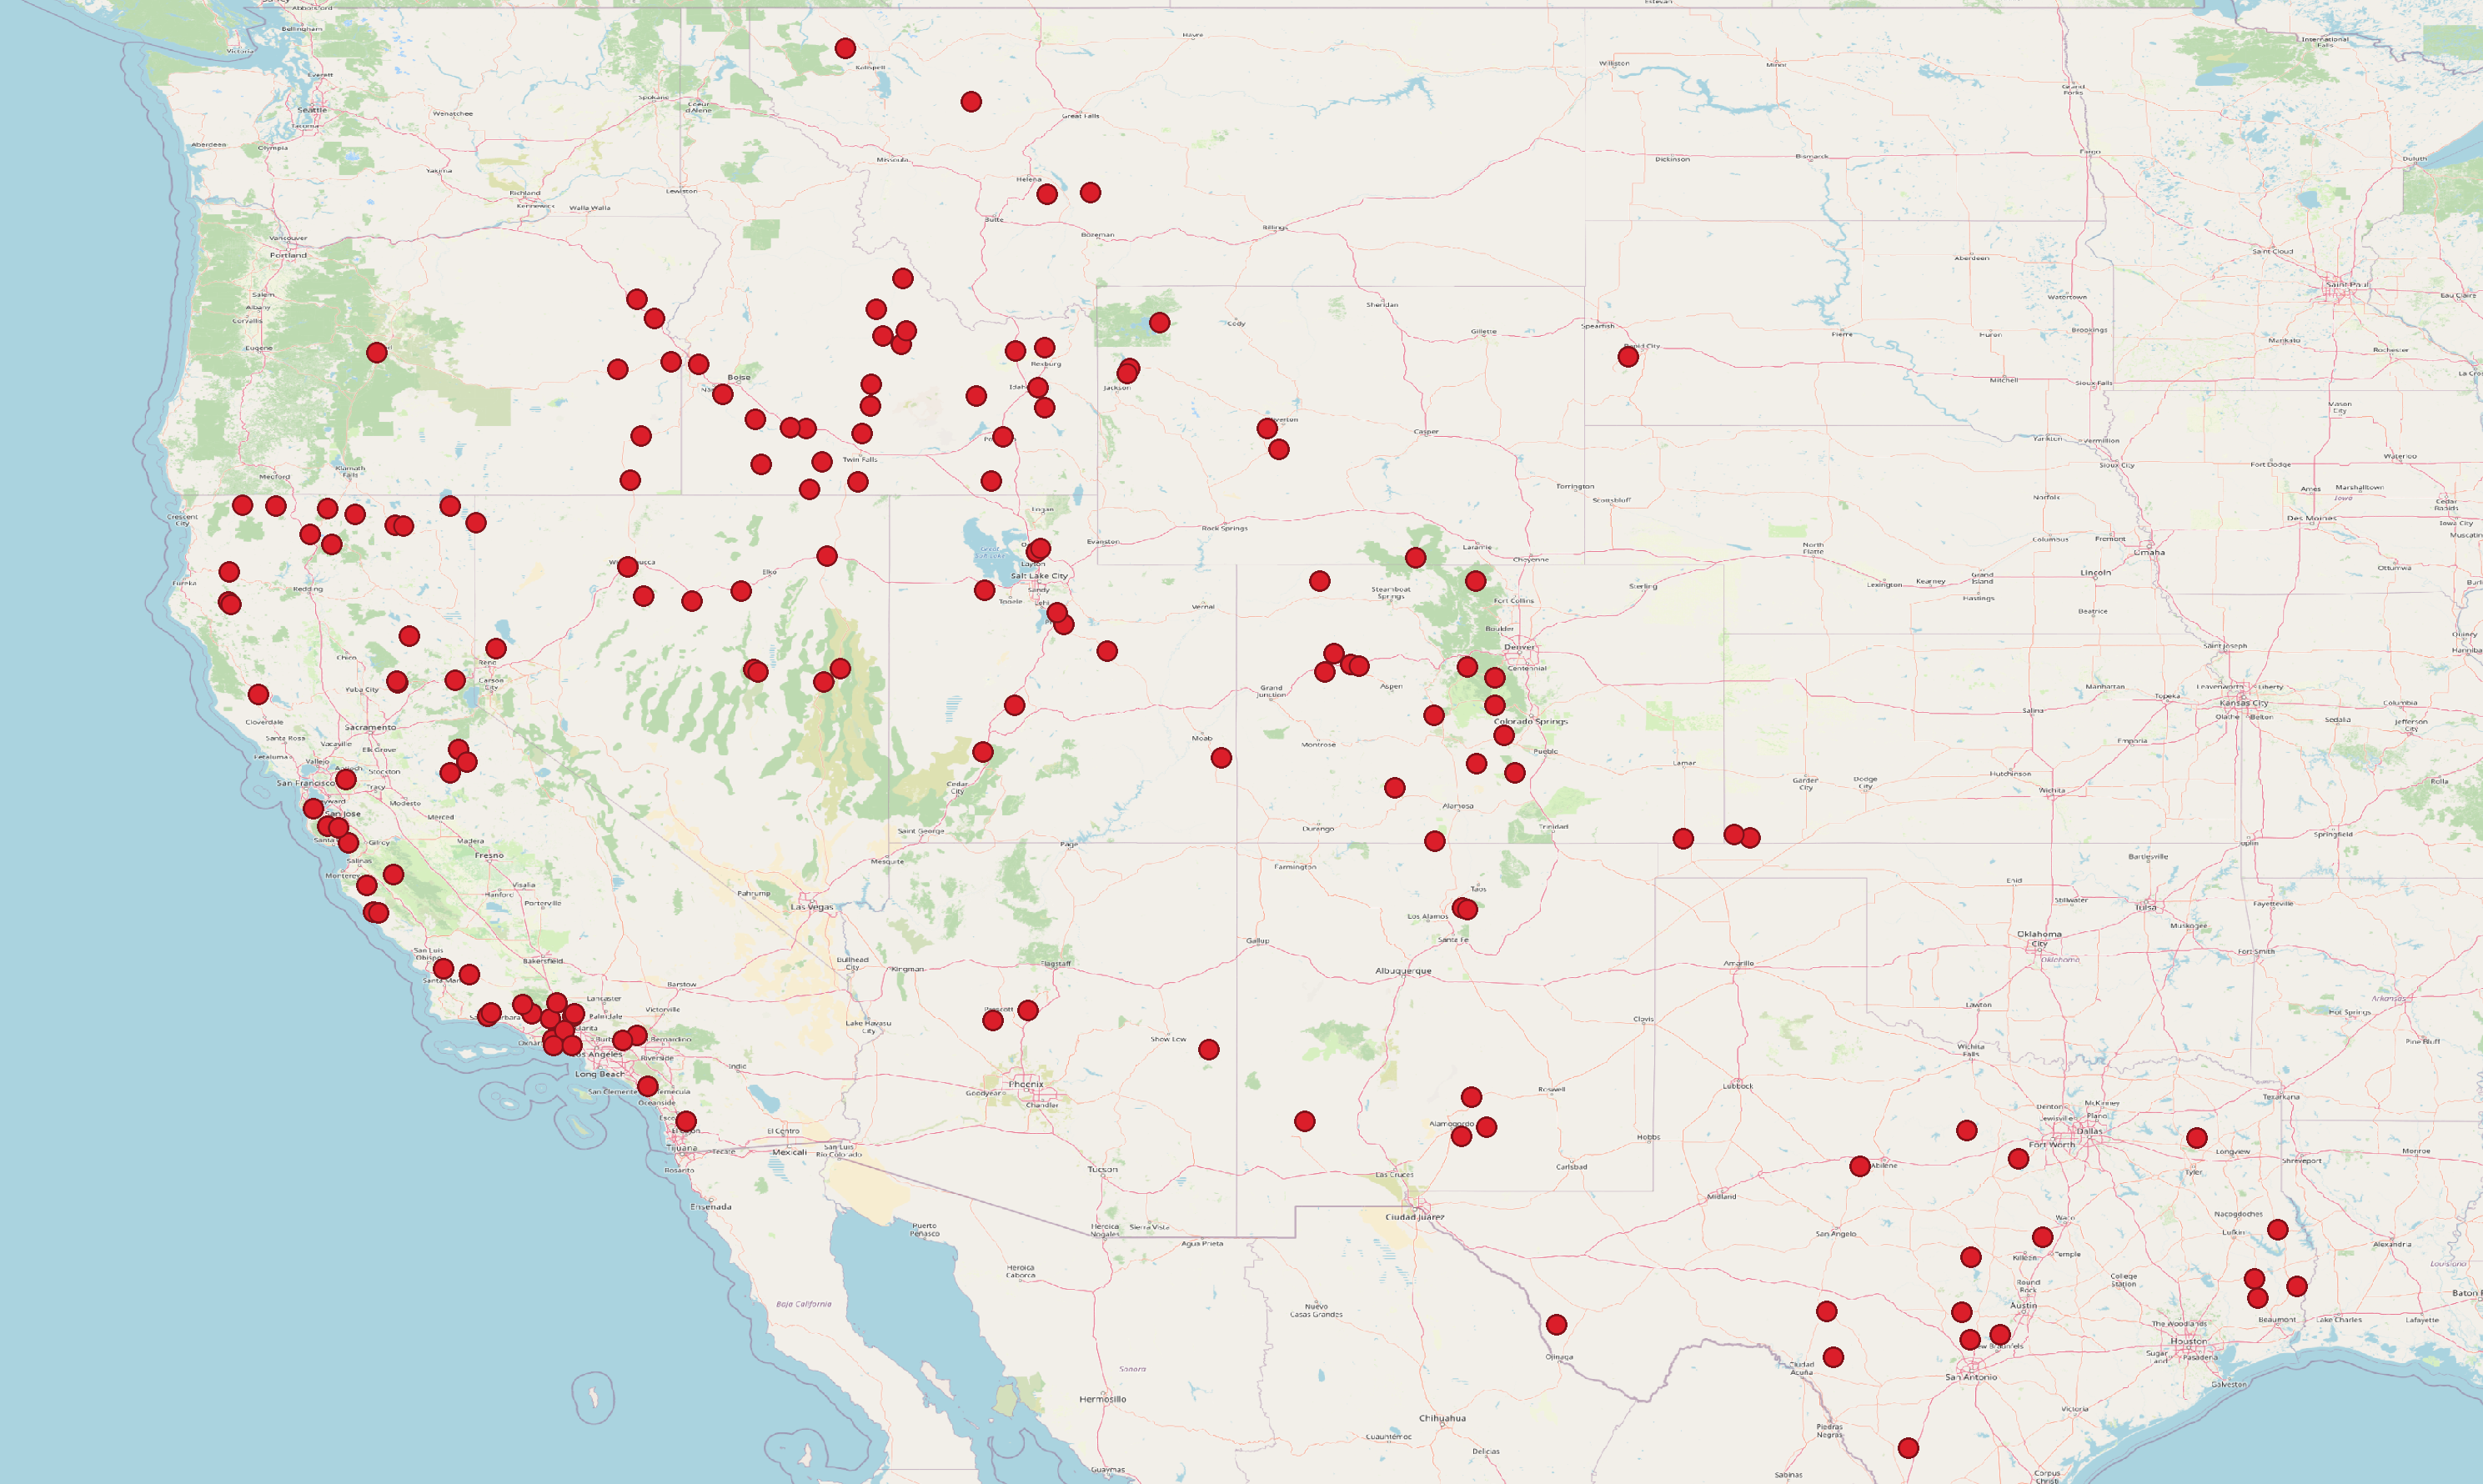 Live fuel moisture measurement sites in western USA